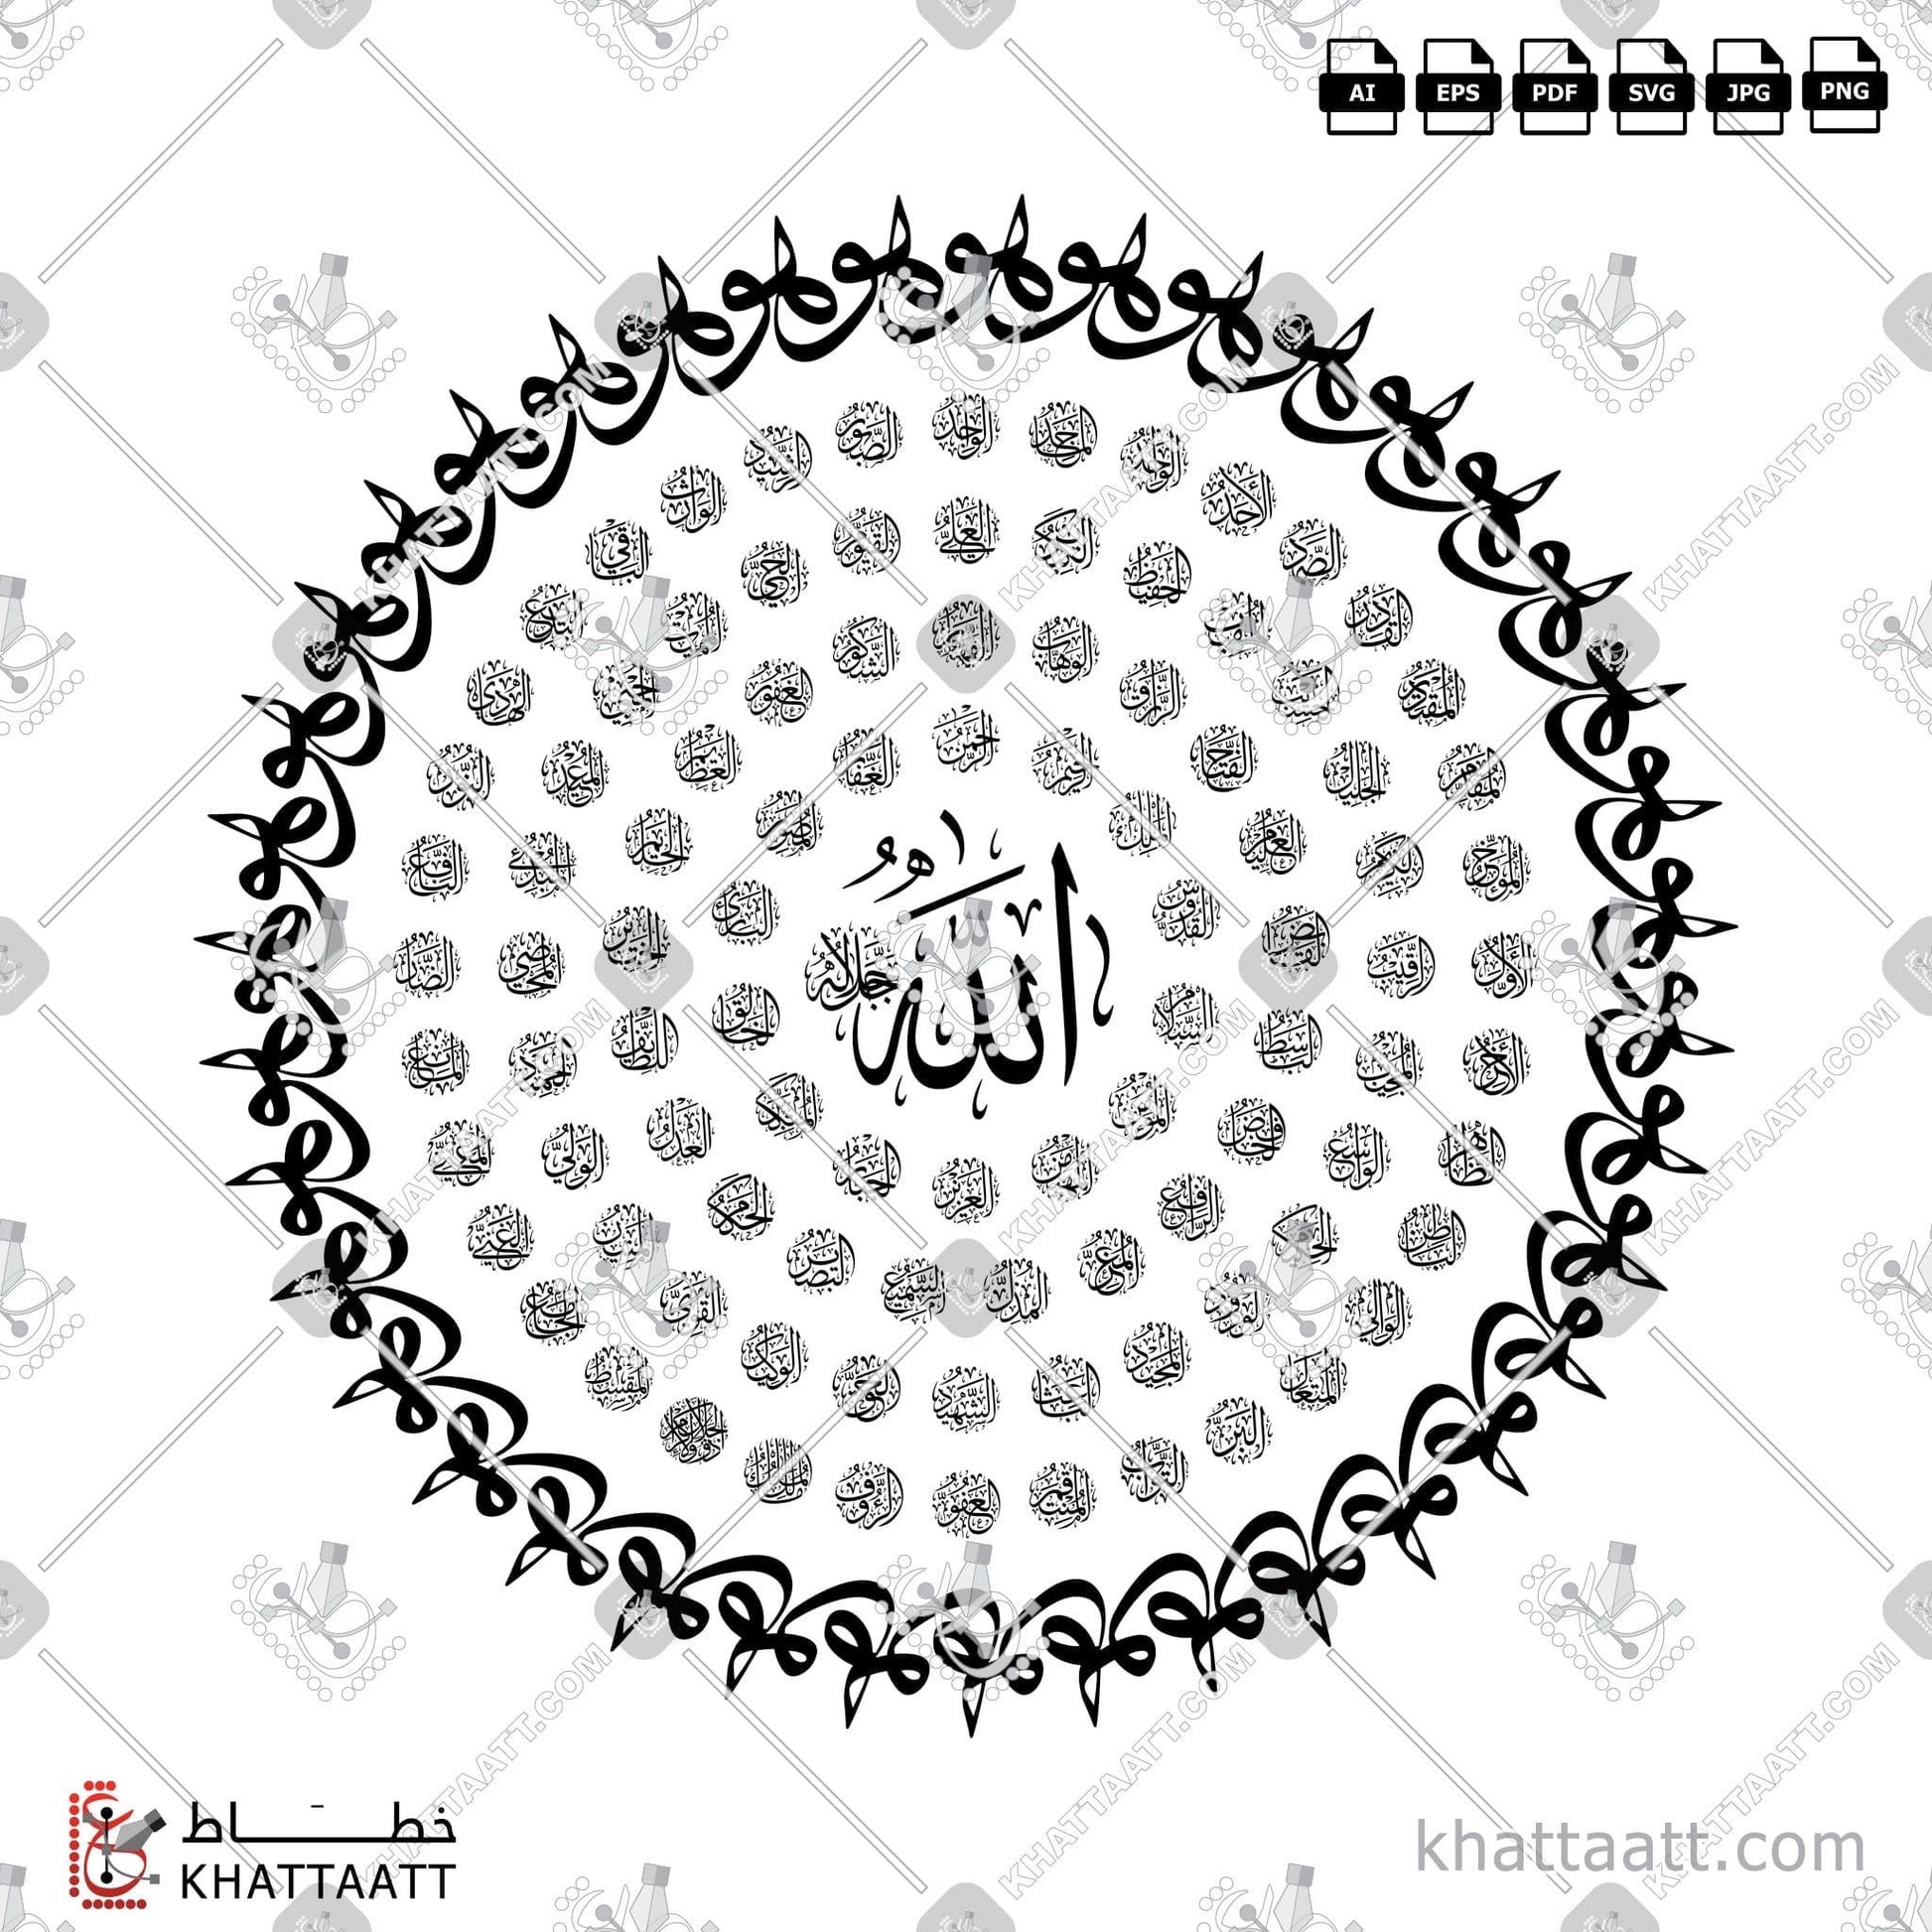 Digital Arabic Calligraphy Vector of 99 Names of Allah - أسماء الله الحسنى in Thuluth - خط الثلث